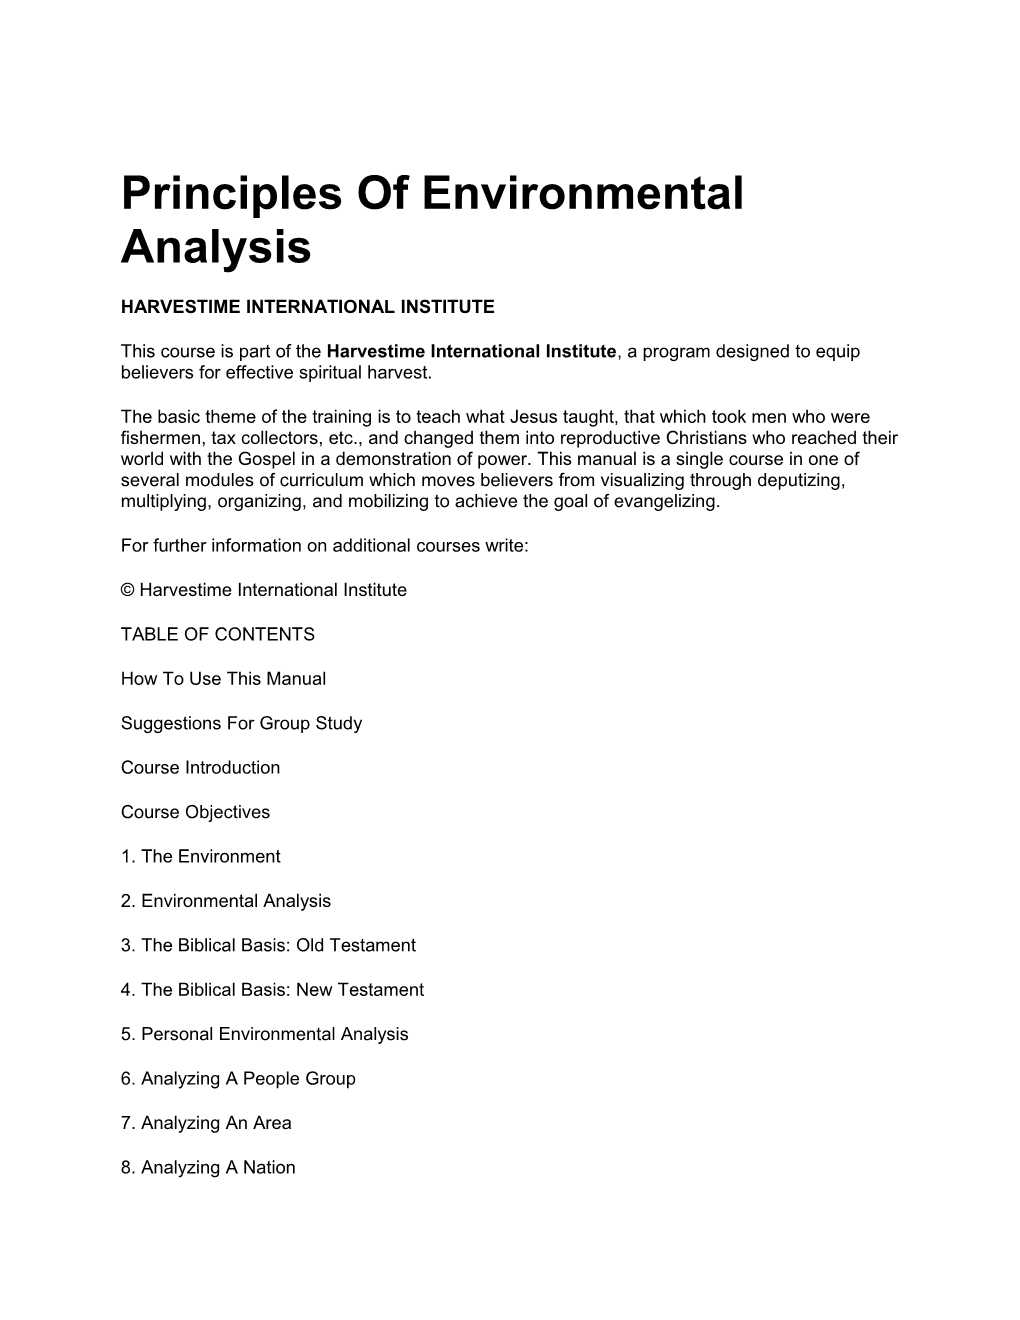 Principles of Environmental Analysis